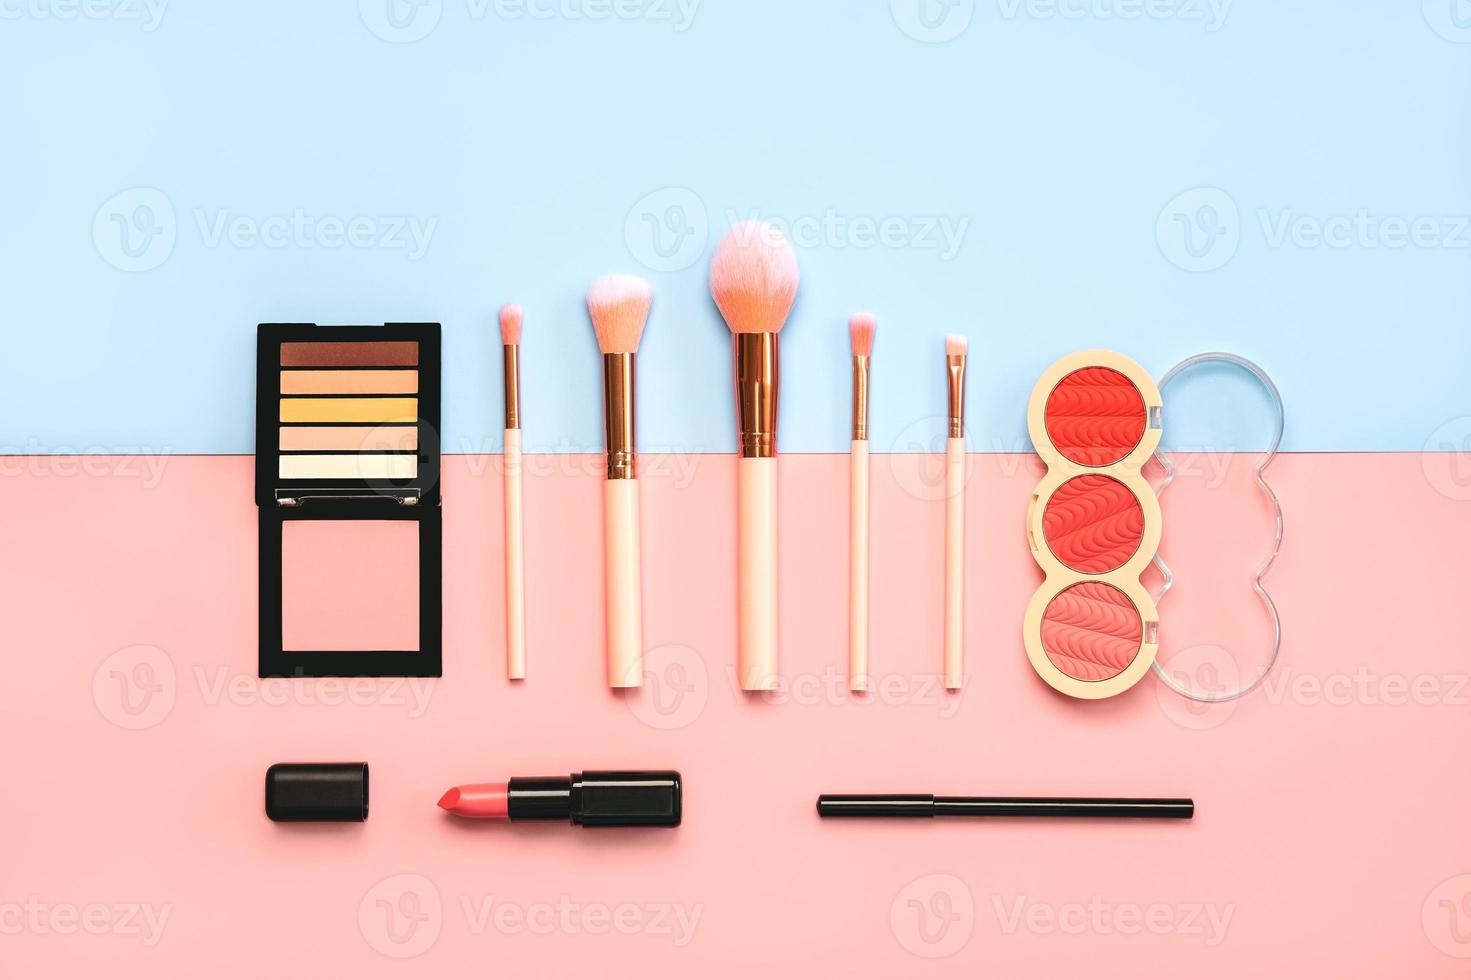 verschillende make-up vrouwelijke cosmetica en accessoires. make-up beauty fashion concept foto